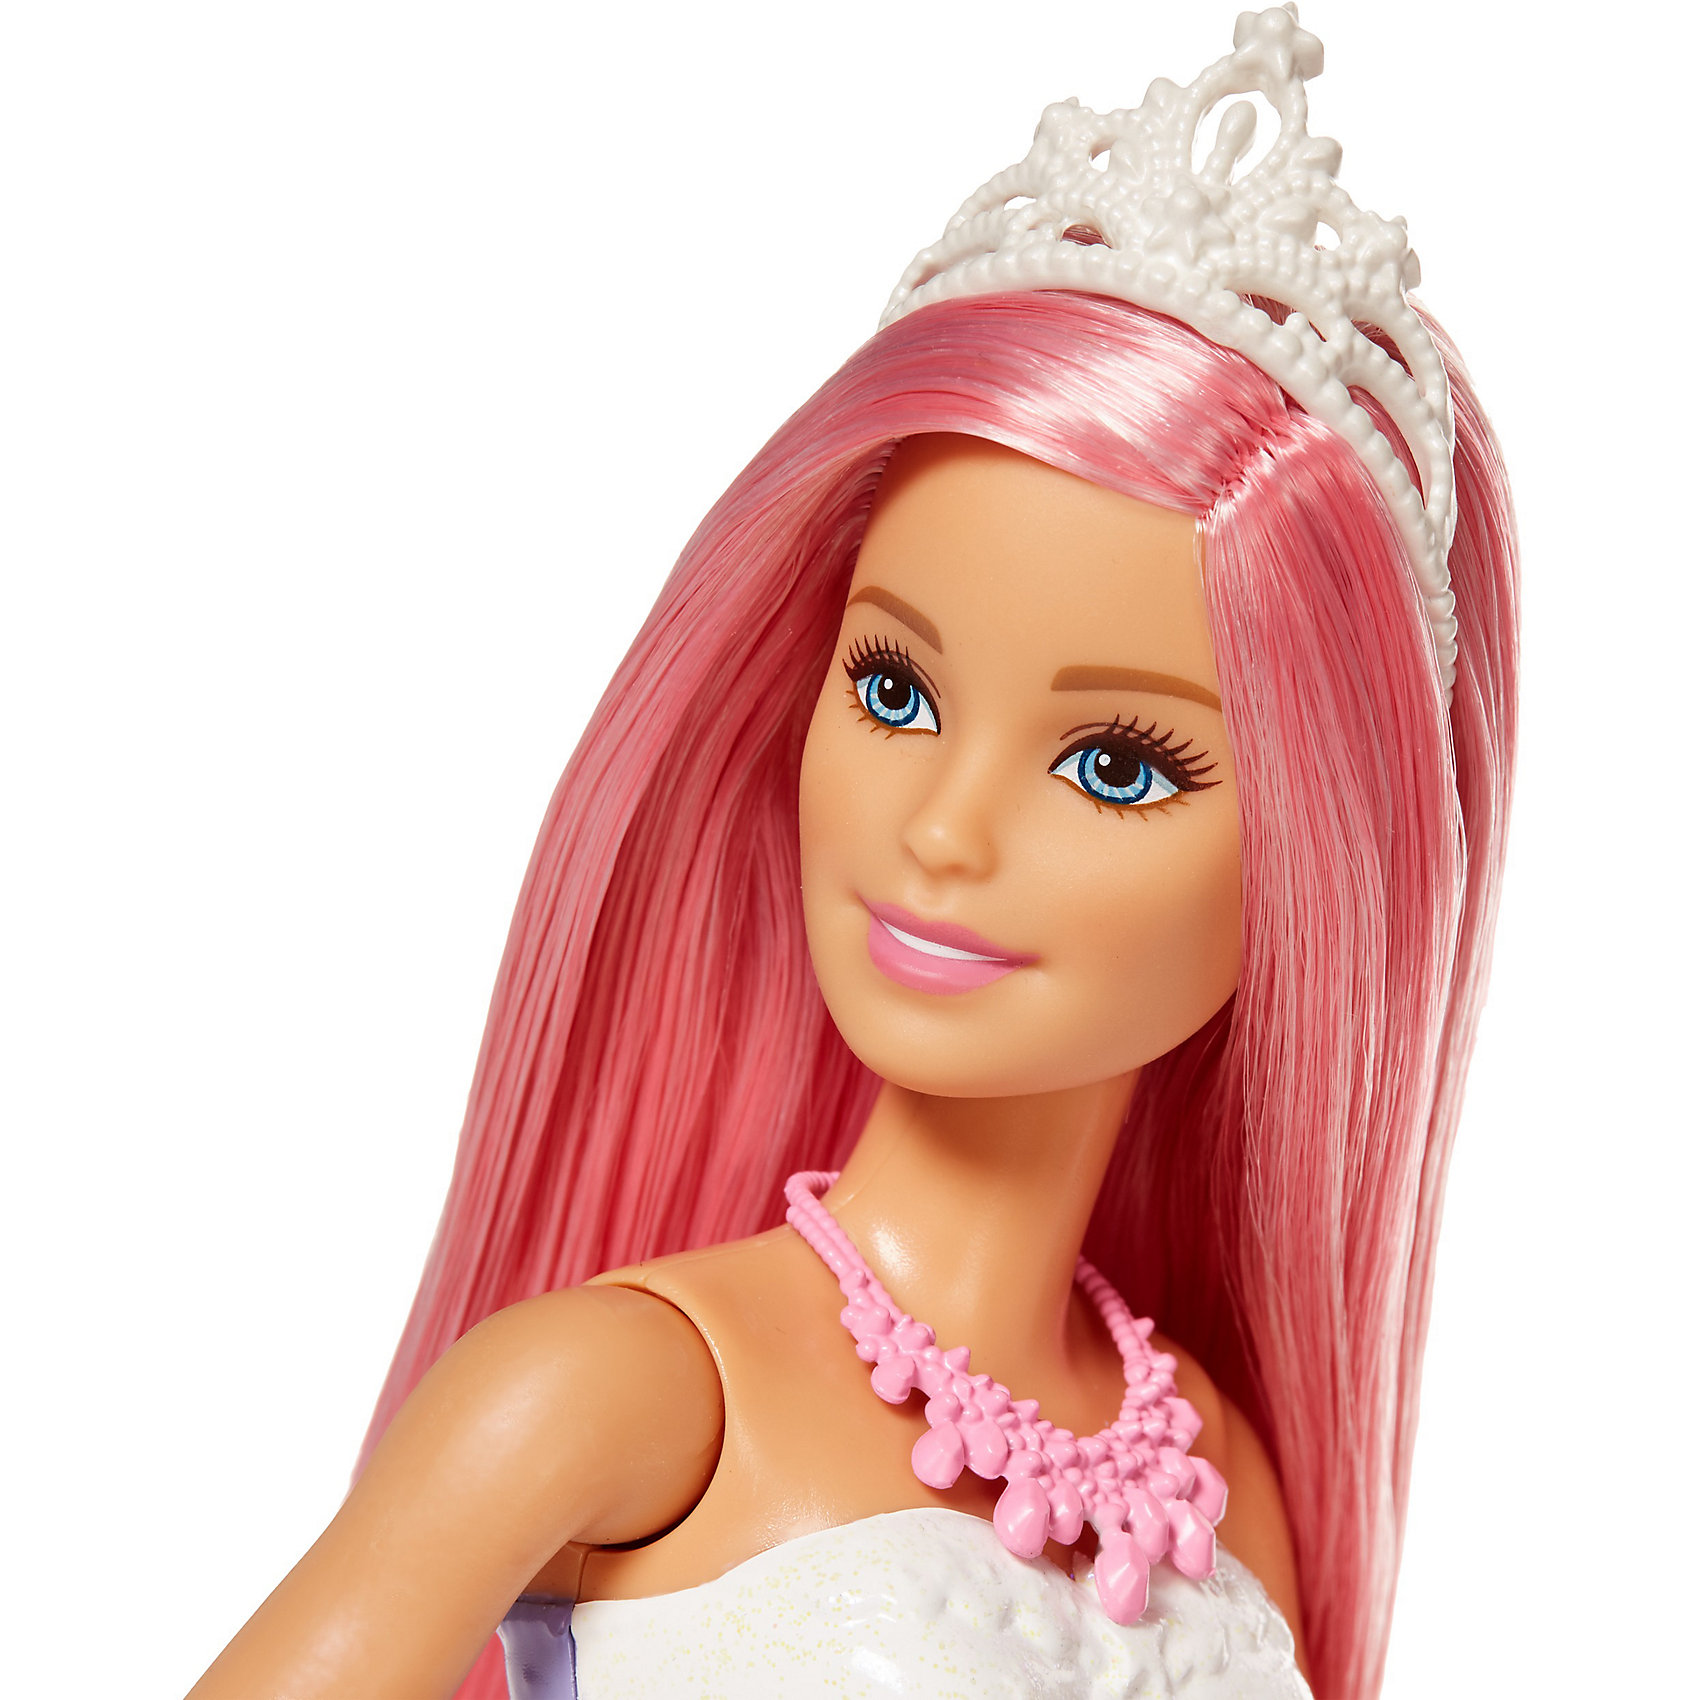 Барби с розовыми волосами. Барби Dreamtopia. Barbie Dreamtopia Единорог. Barbie Dreamtopia Mattel. Барби Дримтопия Радужный Единорог.